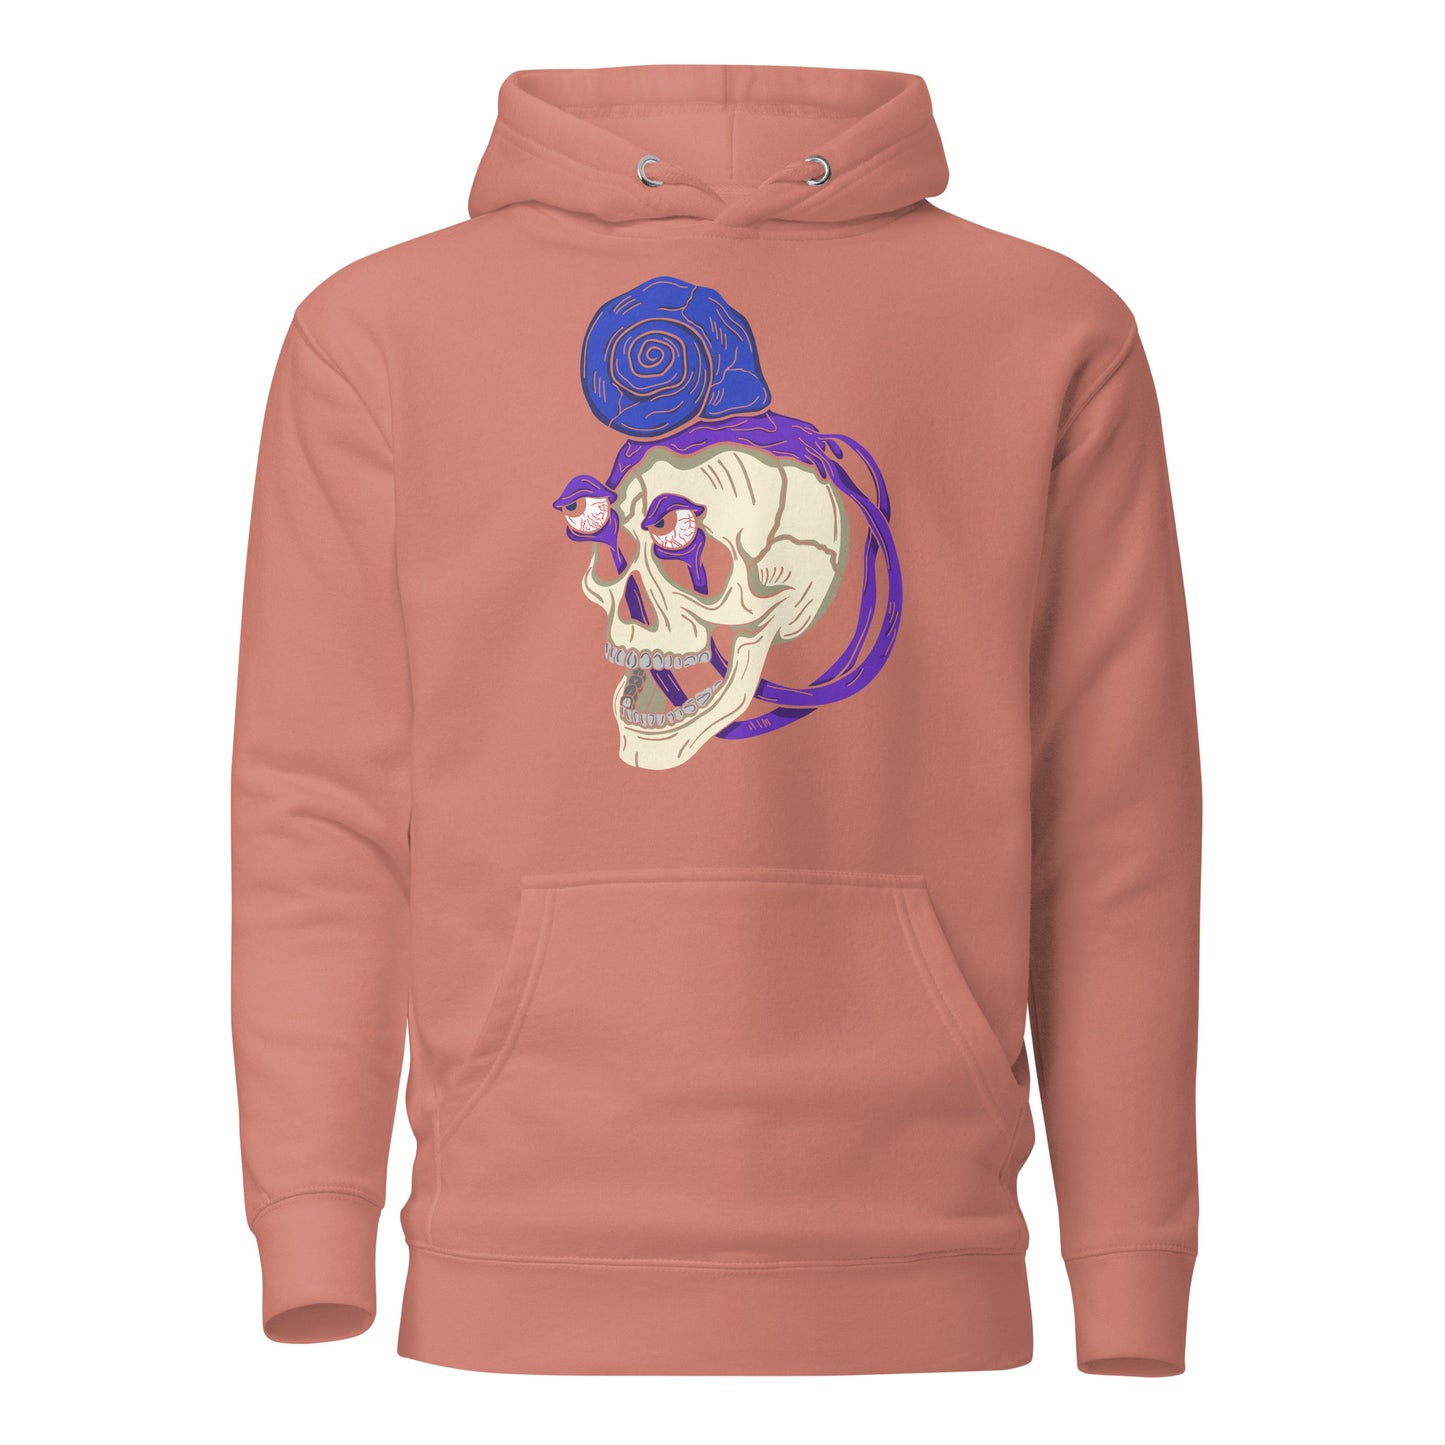 Snail Skull - Premium Unisex Hoodie - Design on the Front